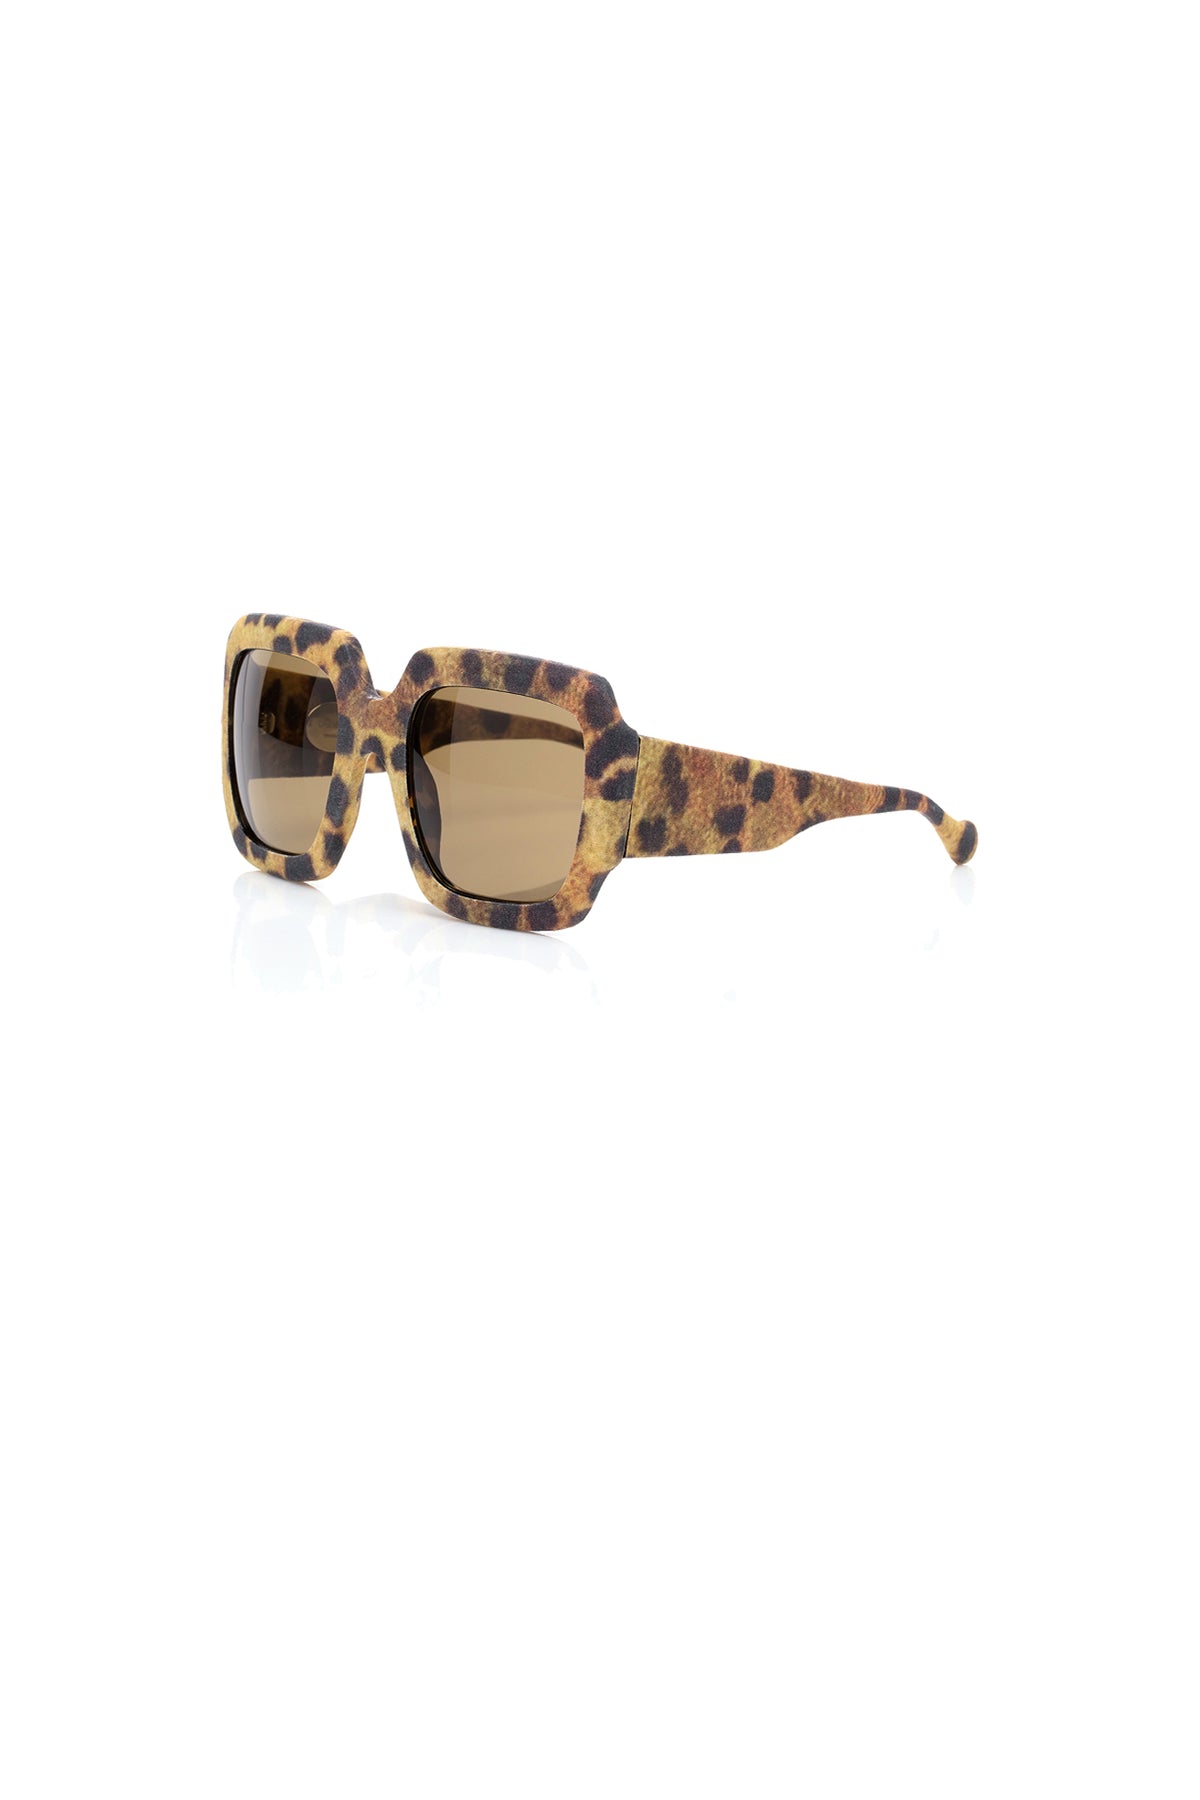 Louis Vuitton monogram wrapped sunglasses